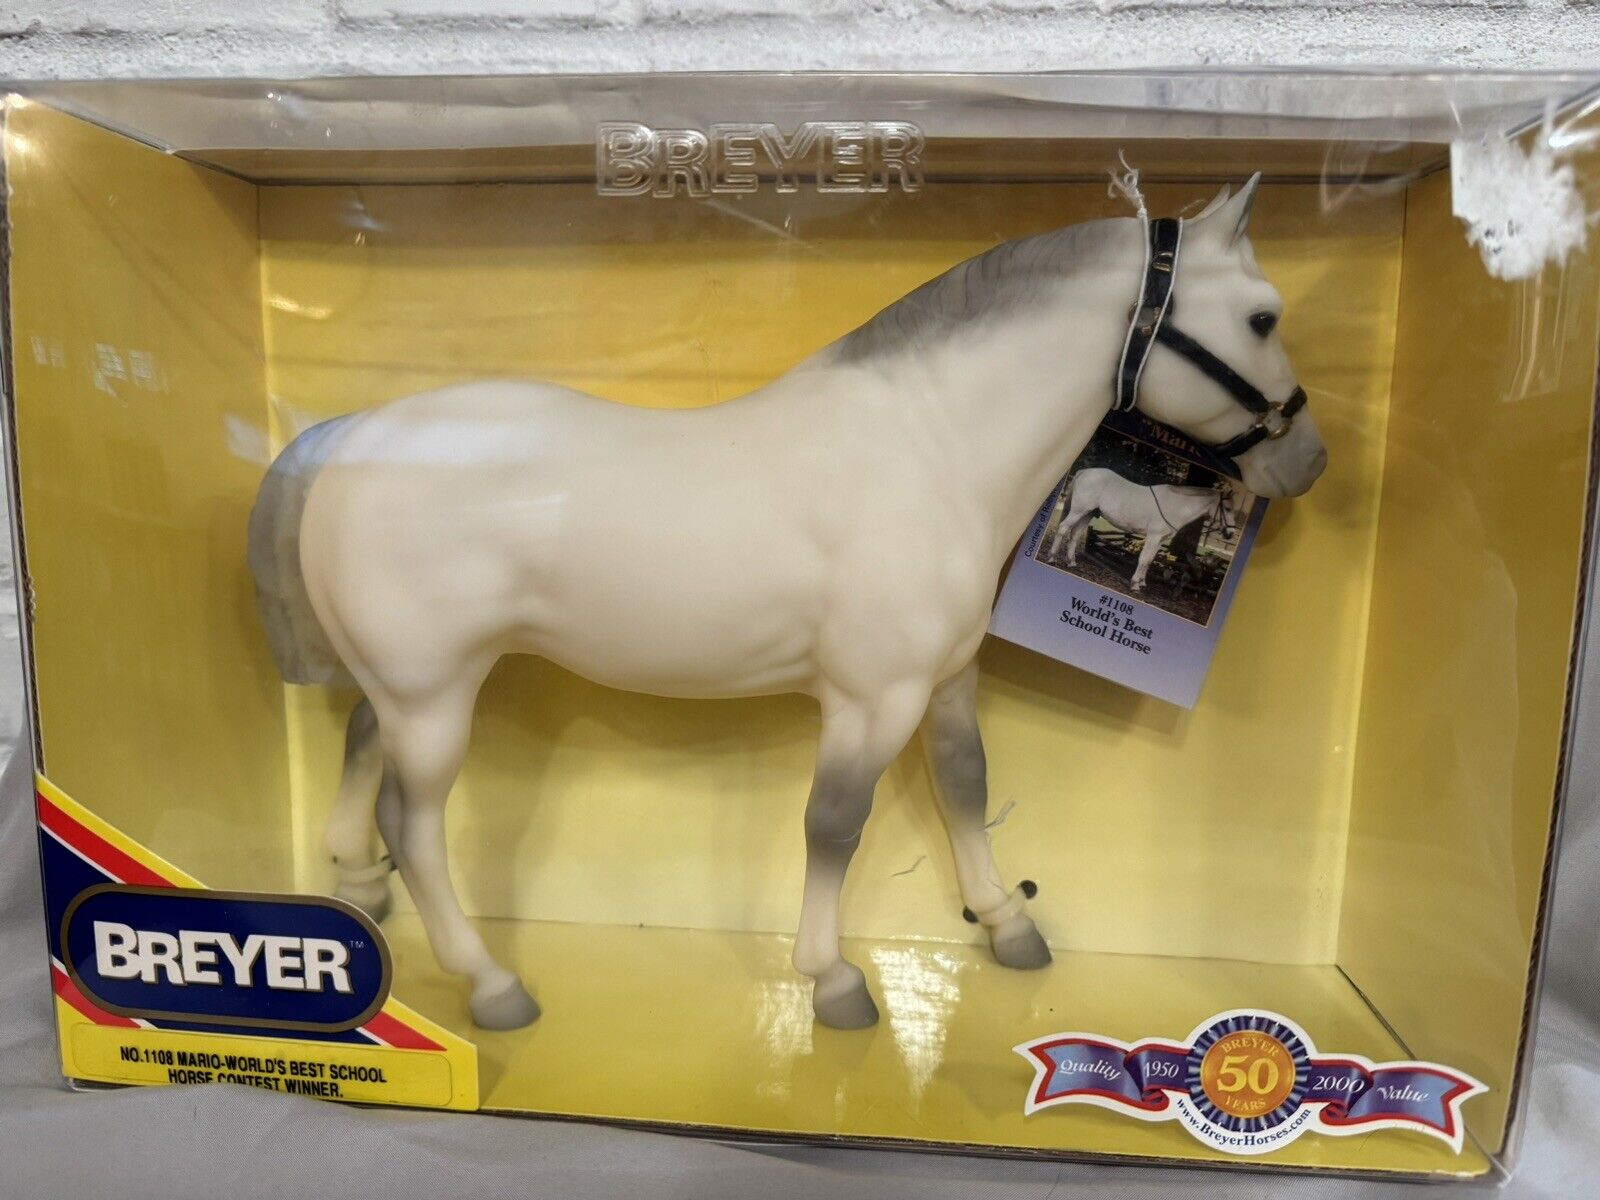 NIB Breyer Mario World’s Best School Horse Contest Winner #1108